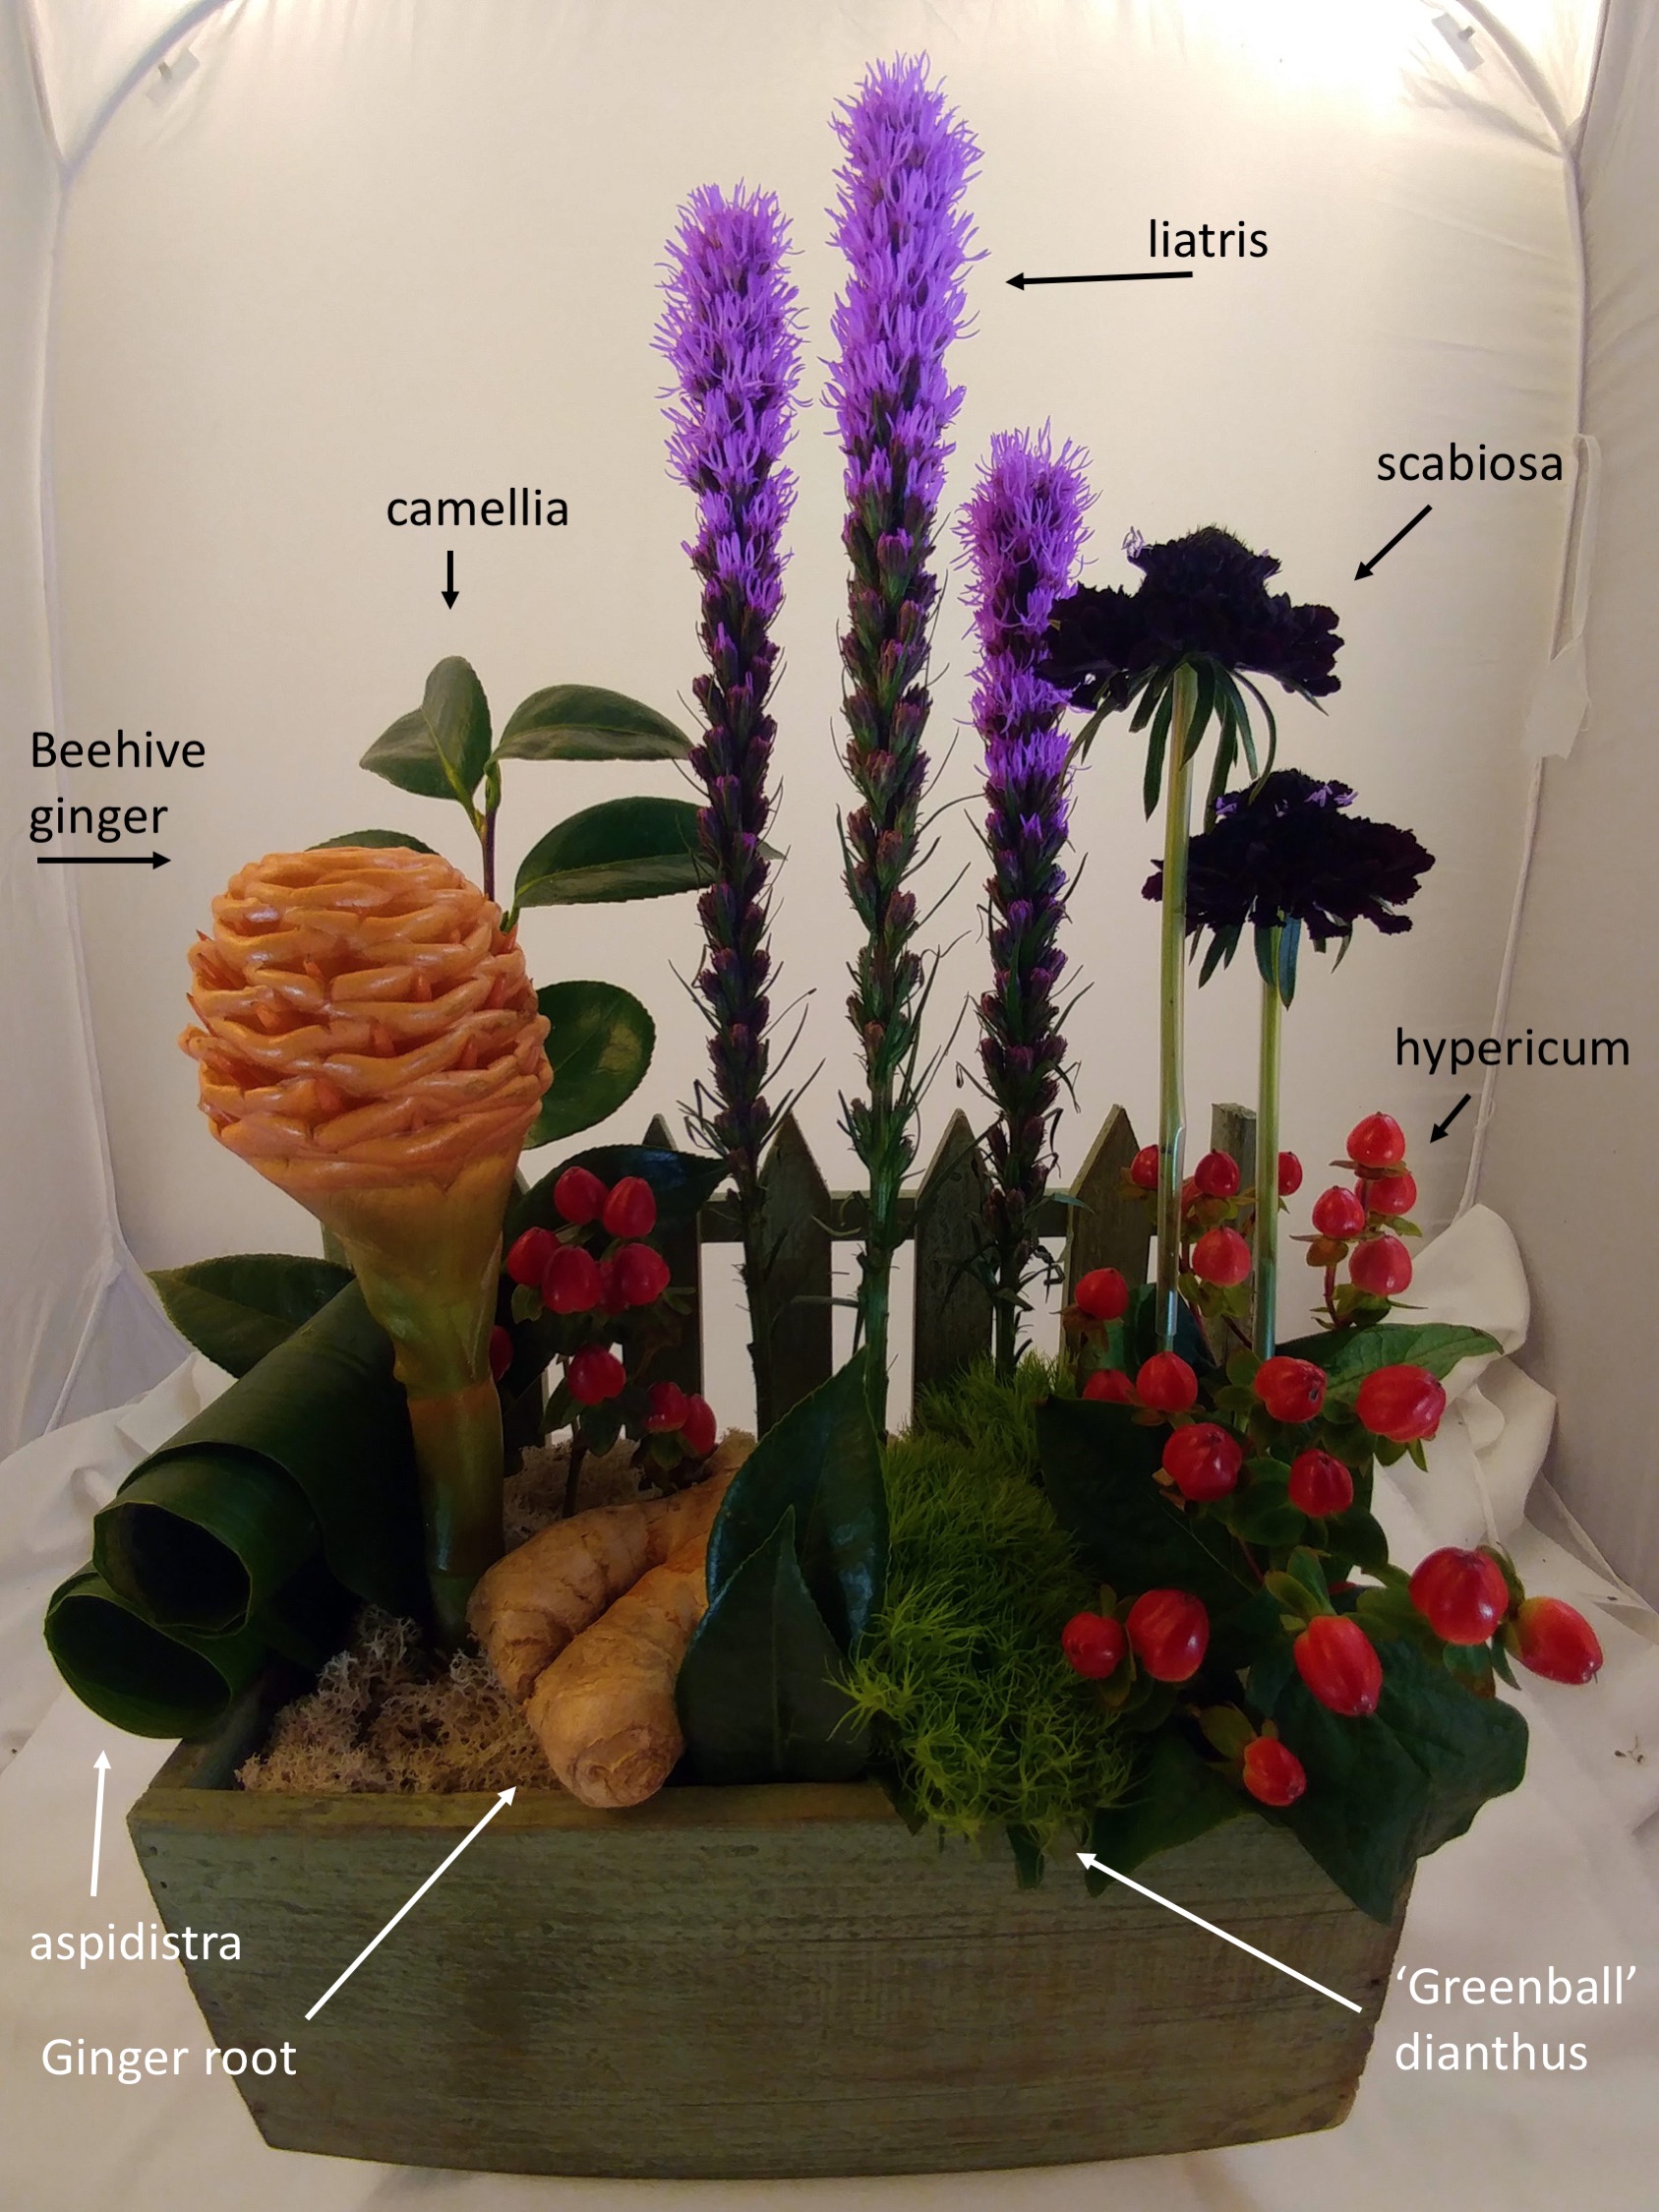 Back To Basics - 7 Key Principles of Floral Design - Floralpeutics